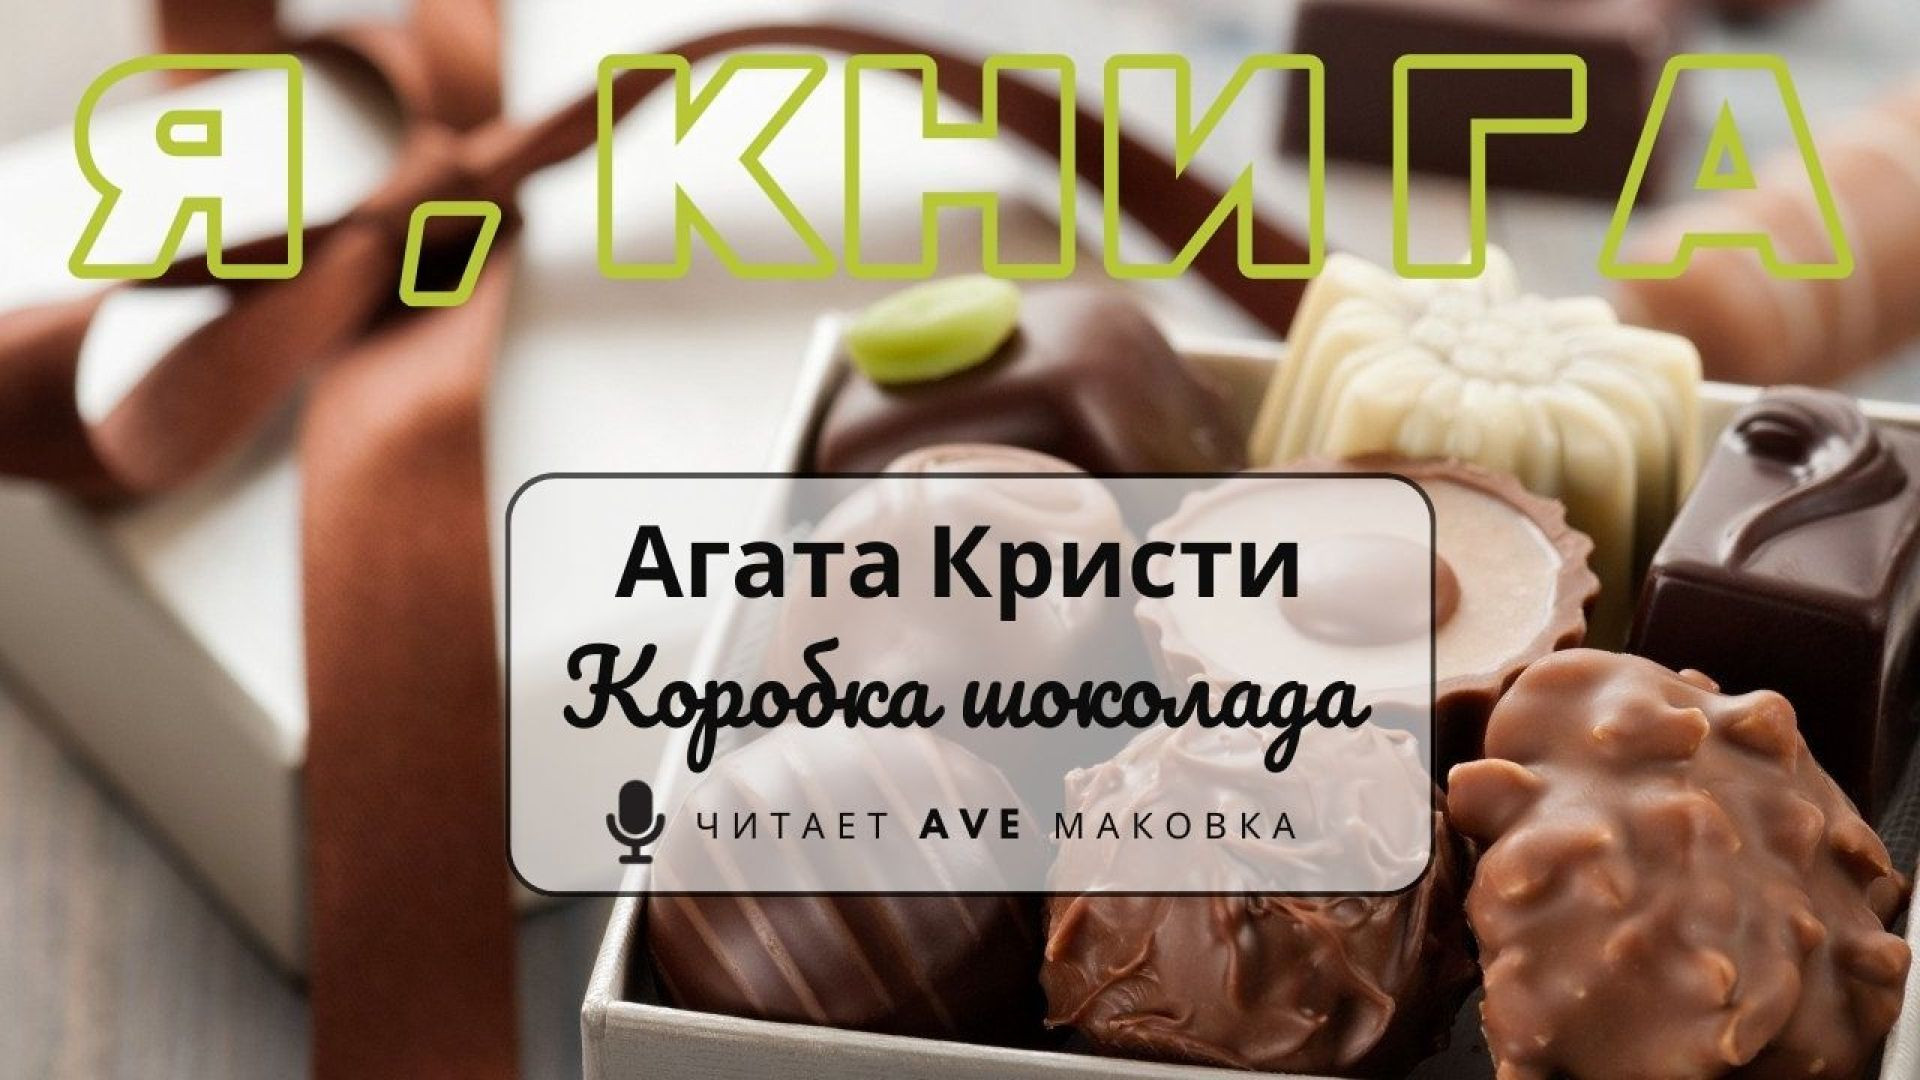 ⁣Агата Кристи / "Коробка шоколада" (рассказ)